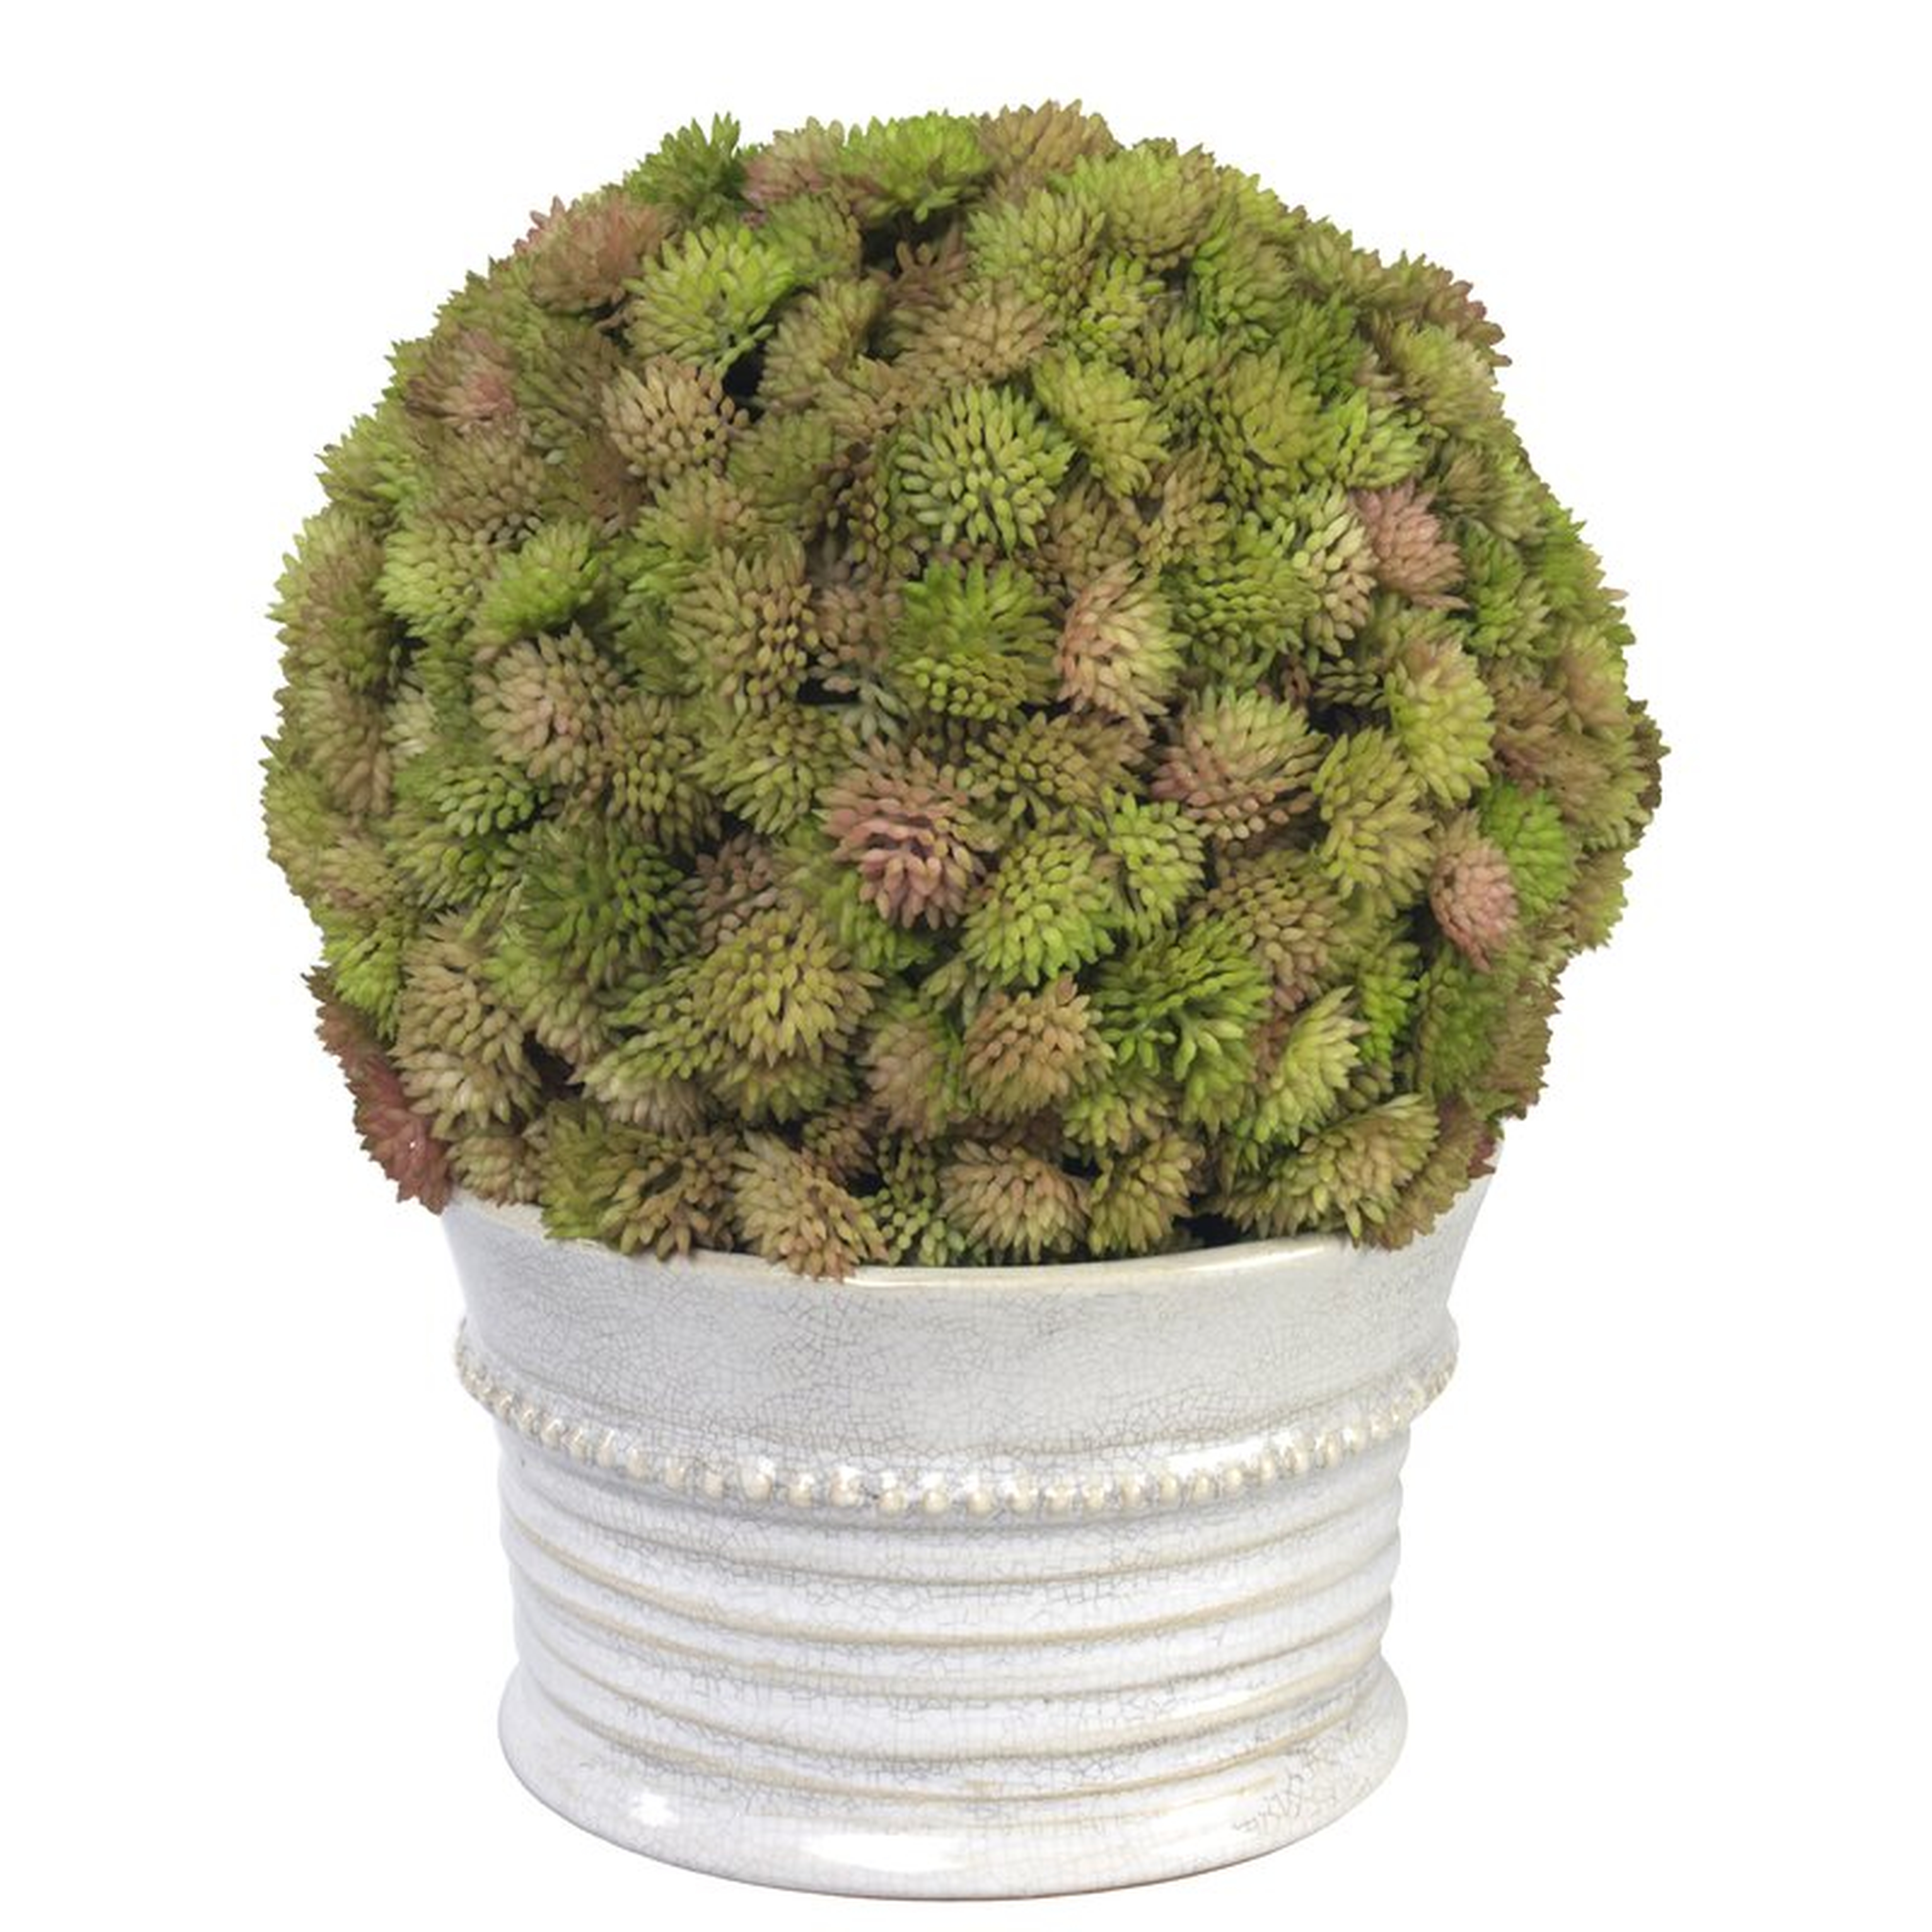 Diane James Home Sedum Ball Flowering Plant in Pot - Perigold